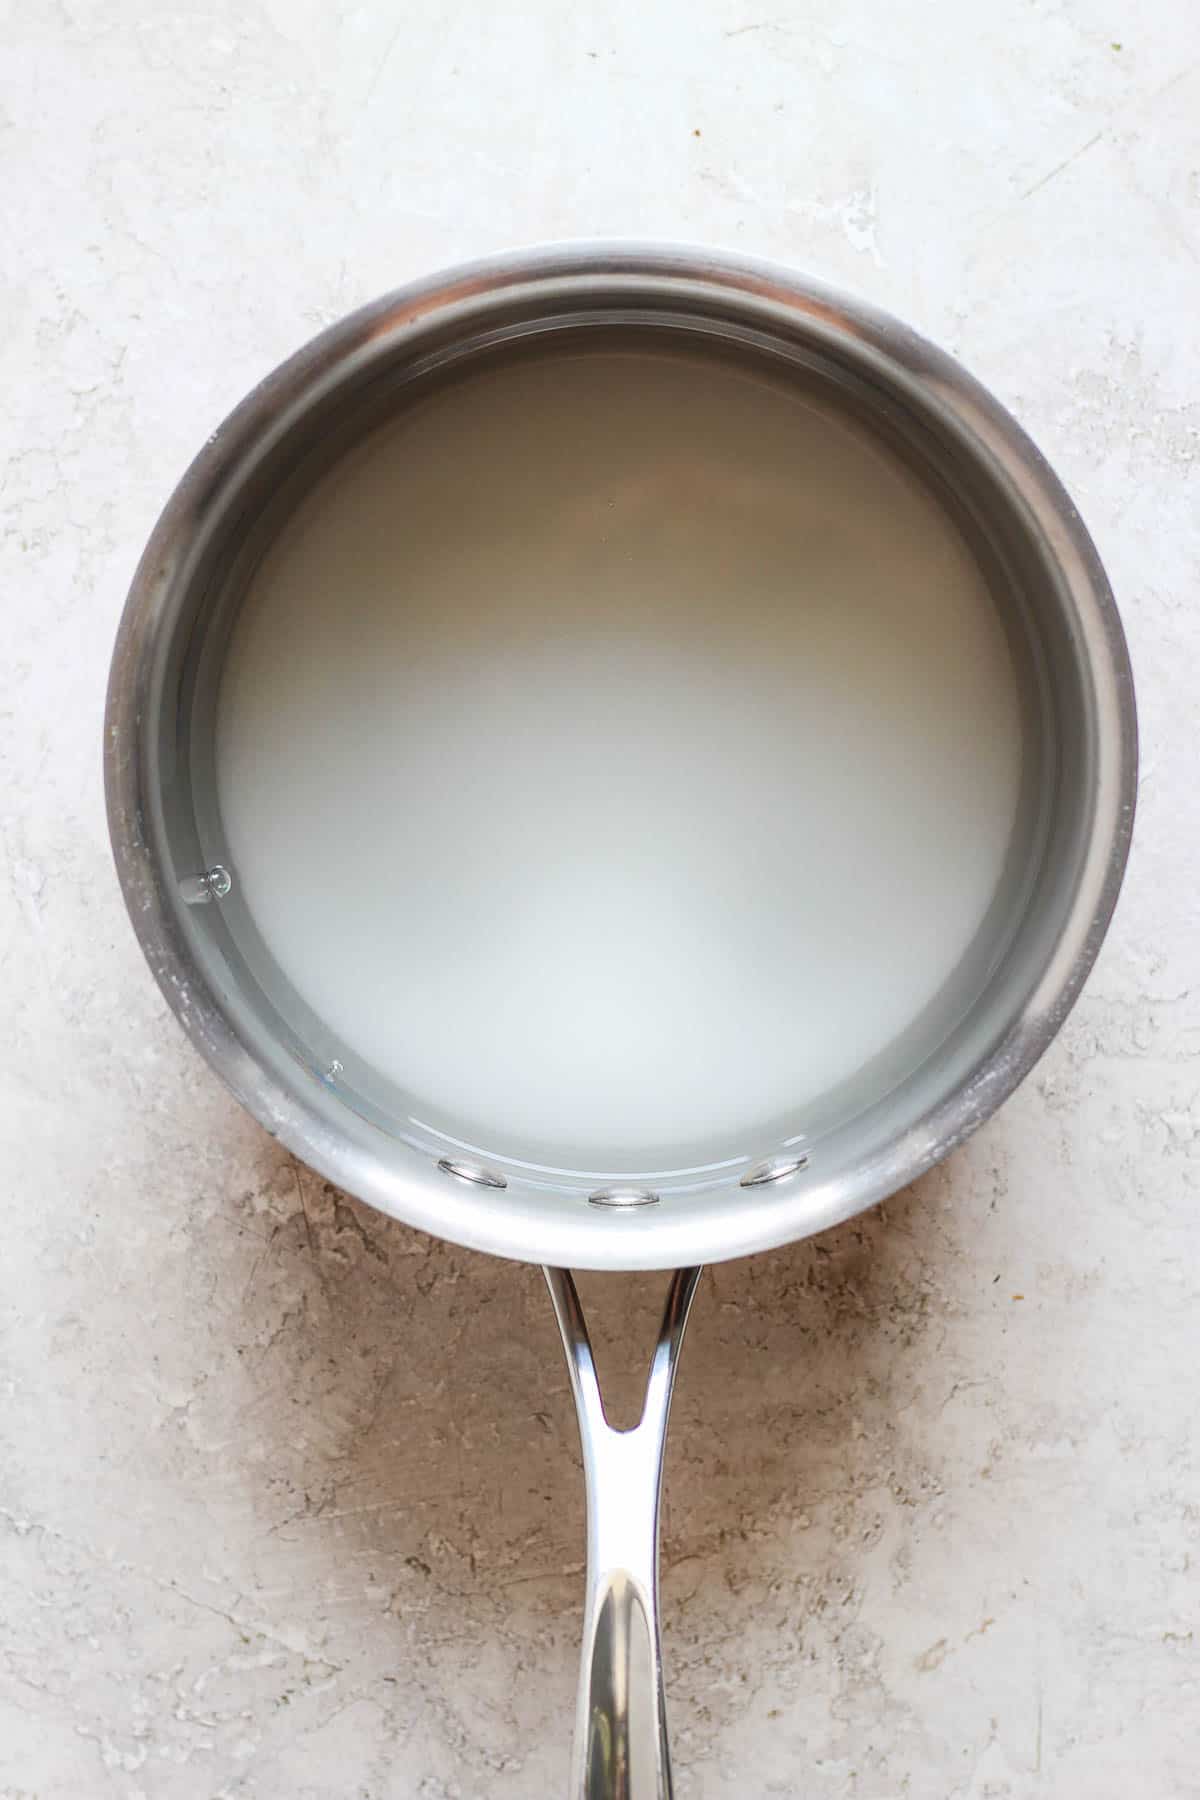 Water and sugar in a saucepan 